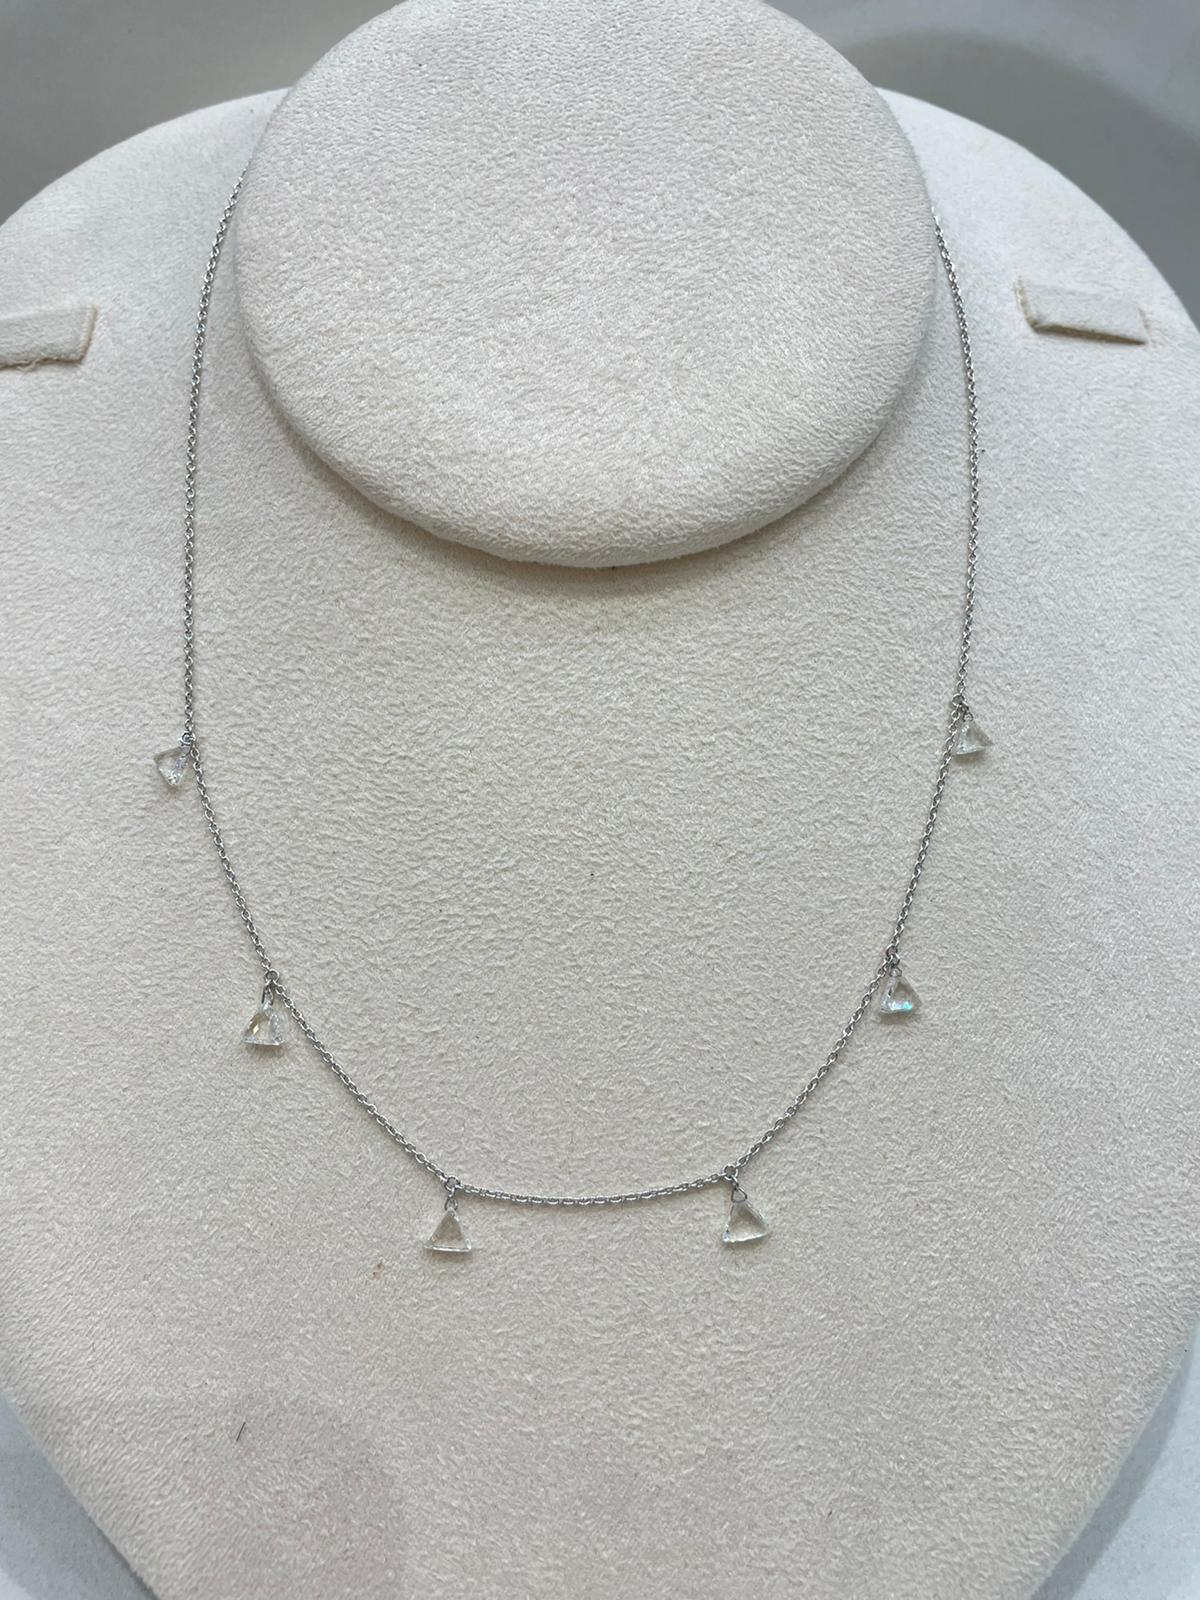 PANIM 18 Karat Diamond Taviz Choker Necklace in 18K White Gold For Sale 2